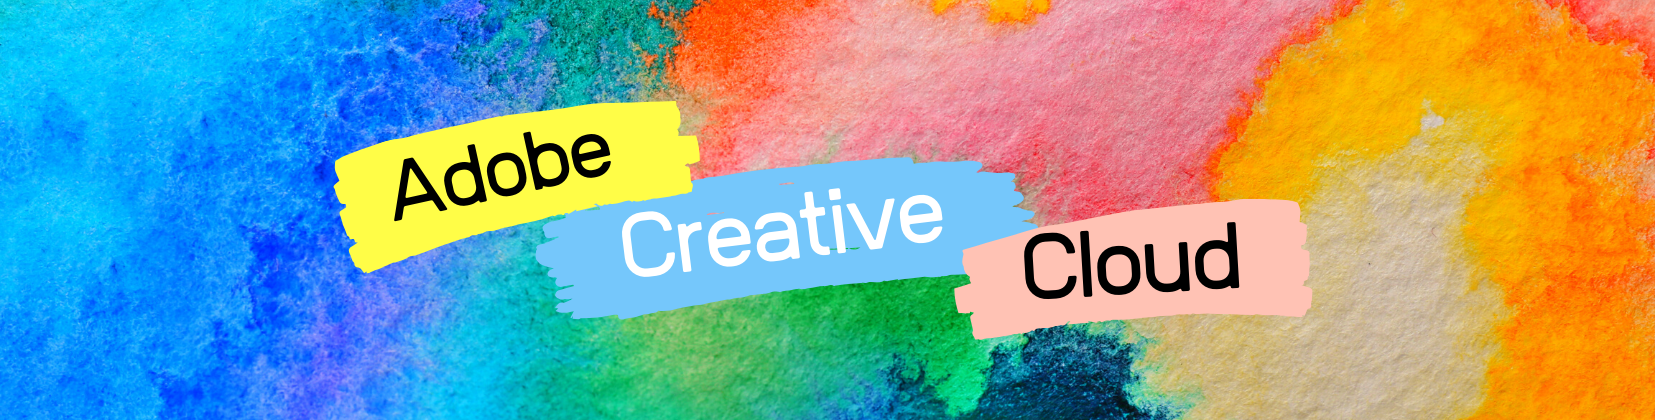 Adobe Creative Cloud Software Banner